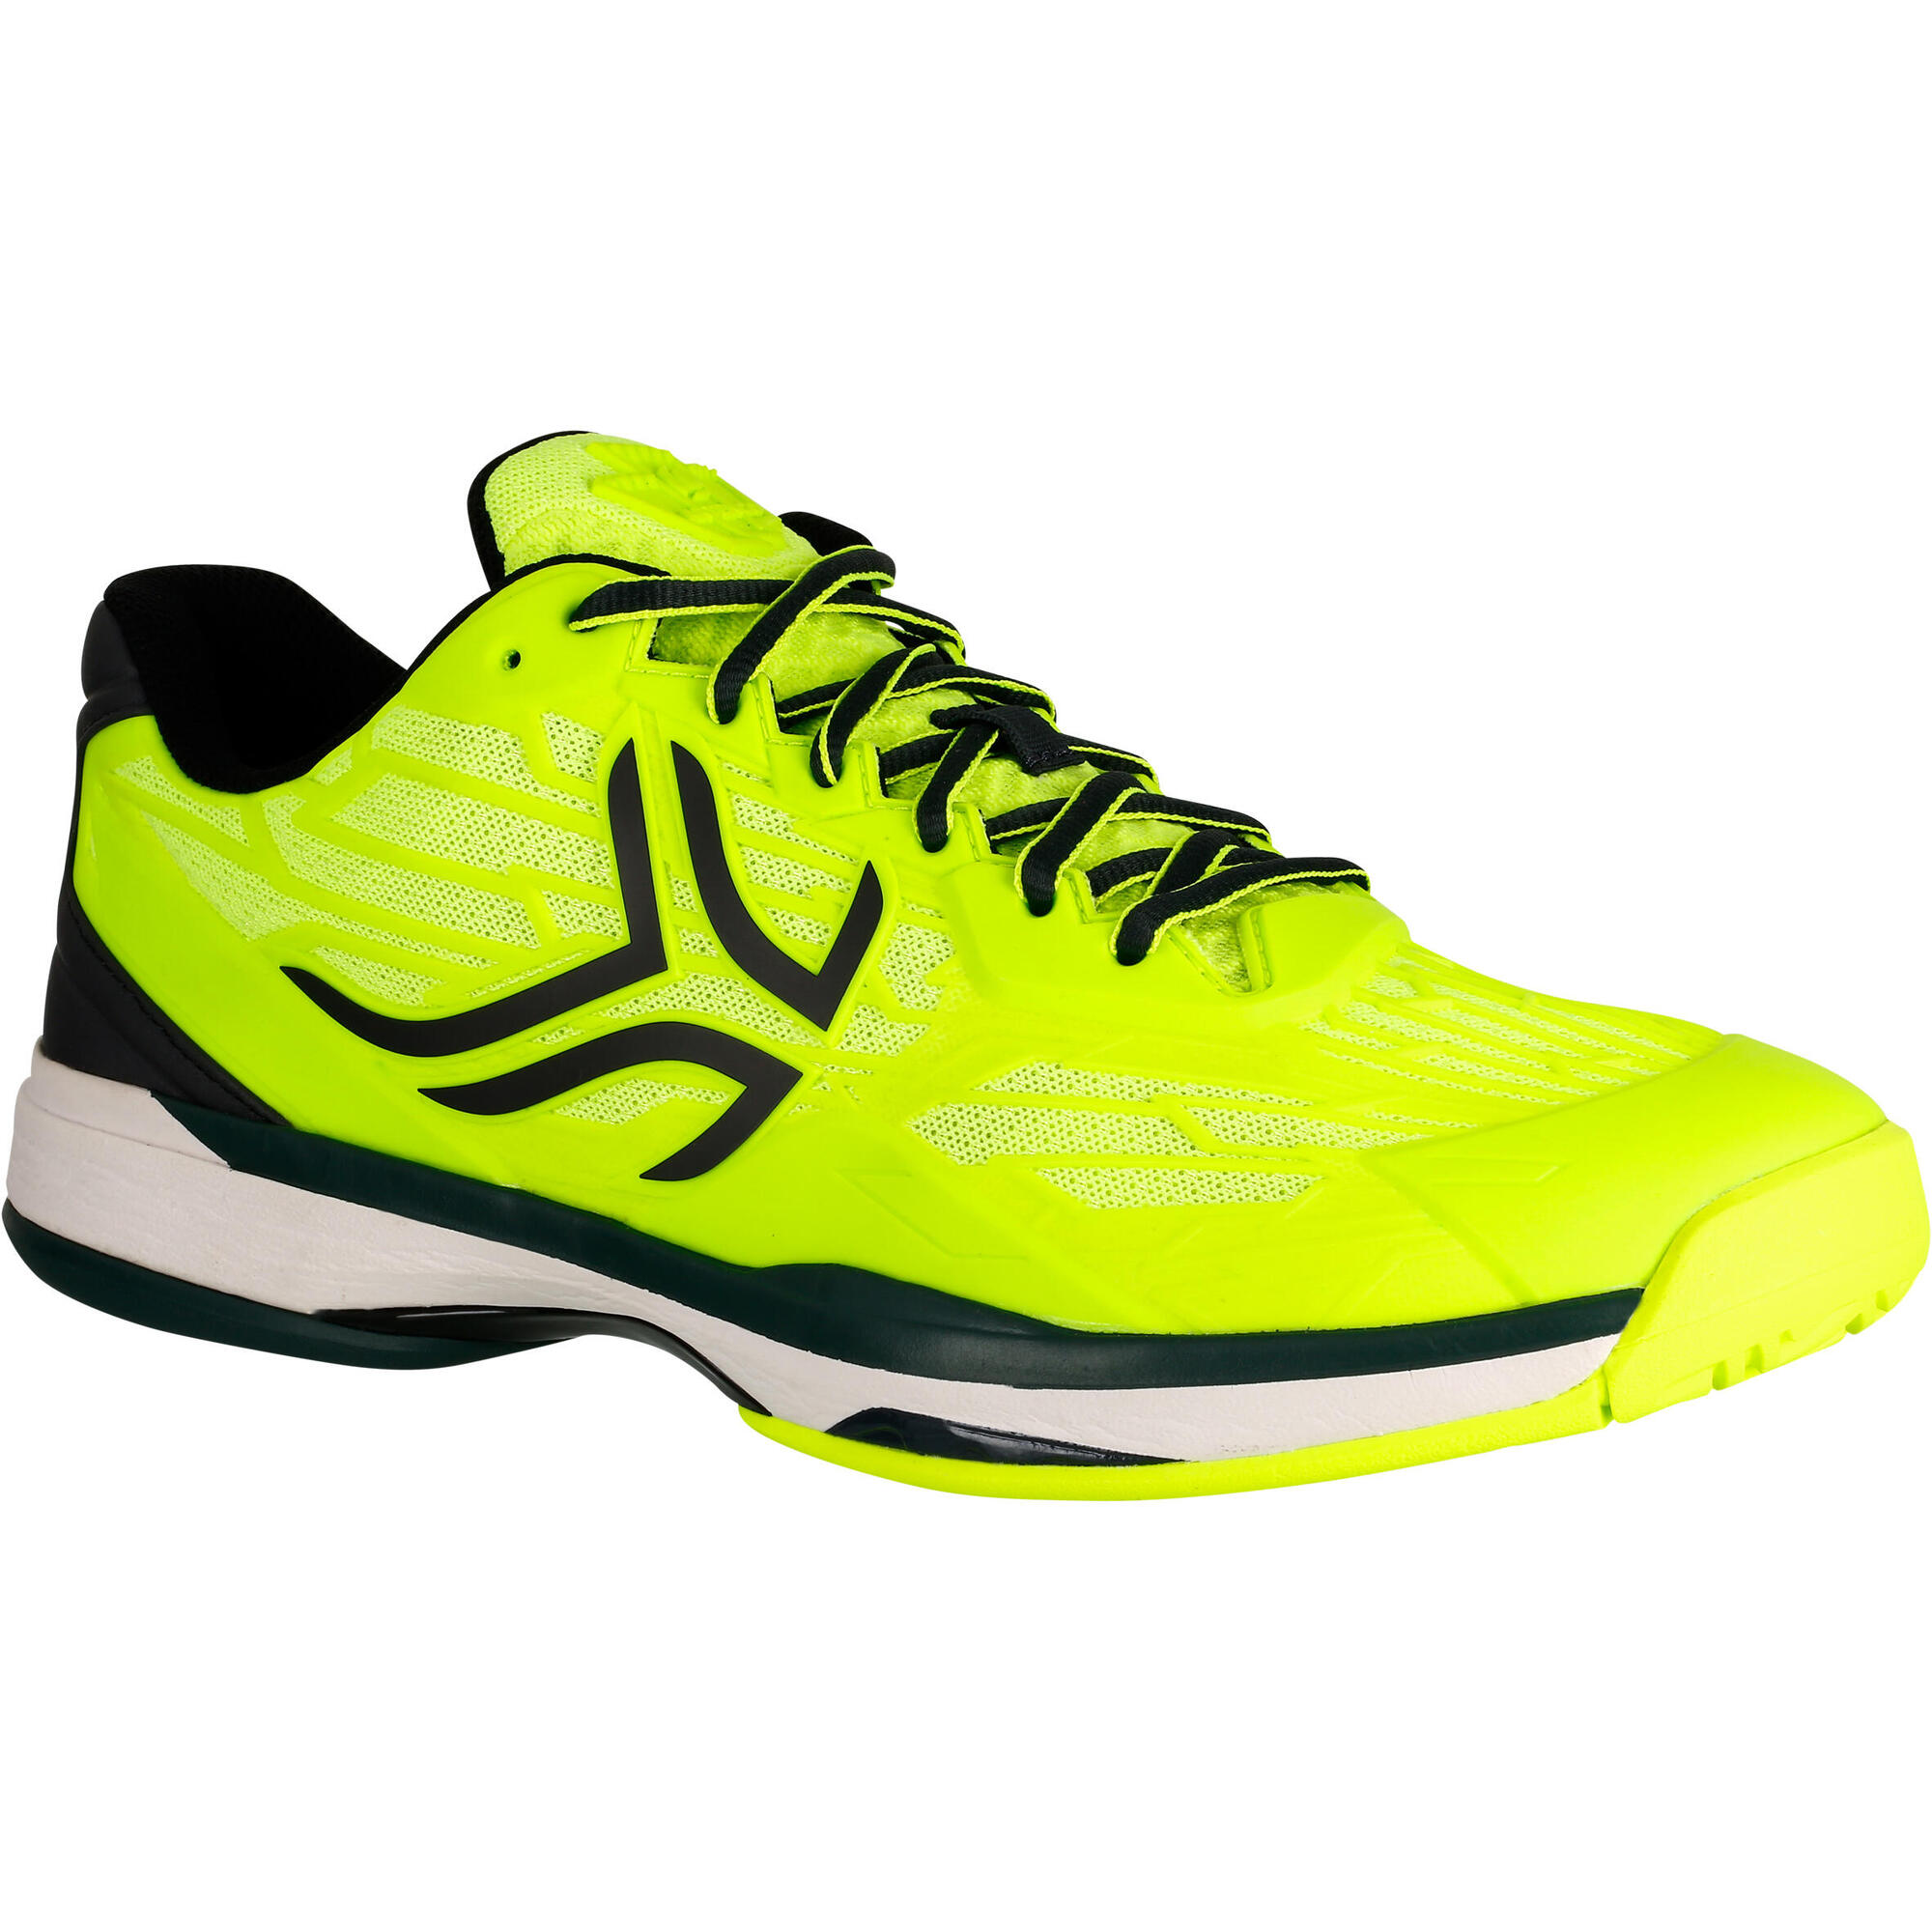 TS990 Multicourt Tennis Shoes Neon Yellow artengo